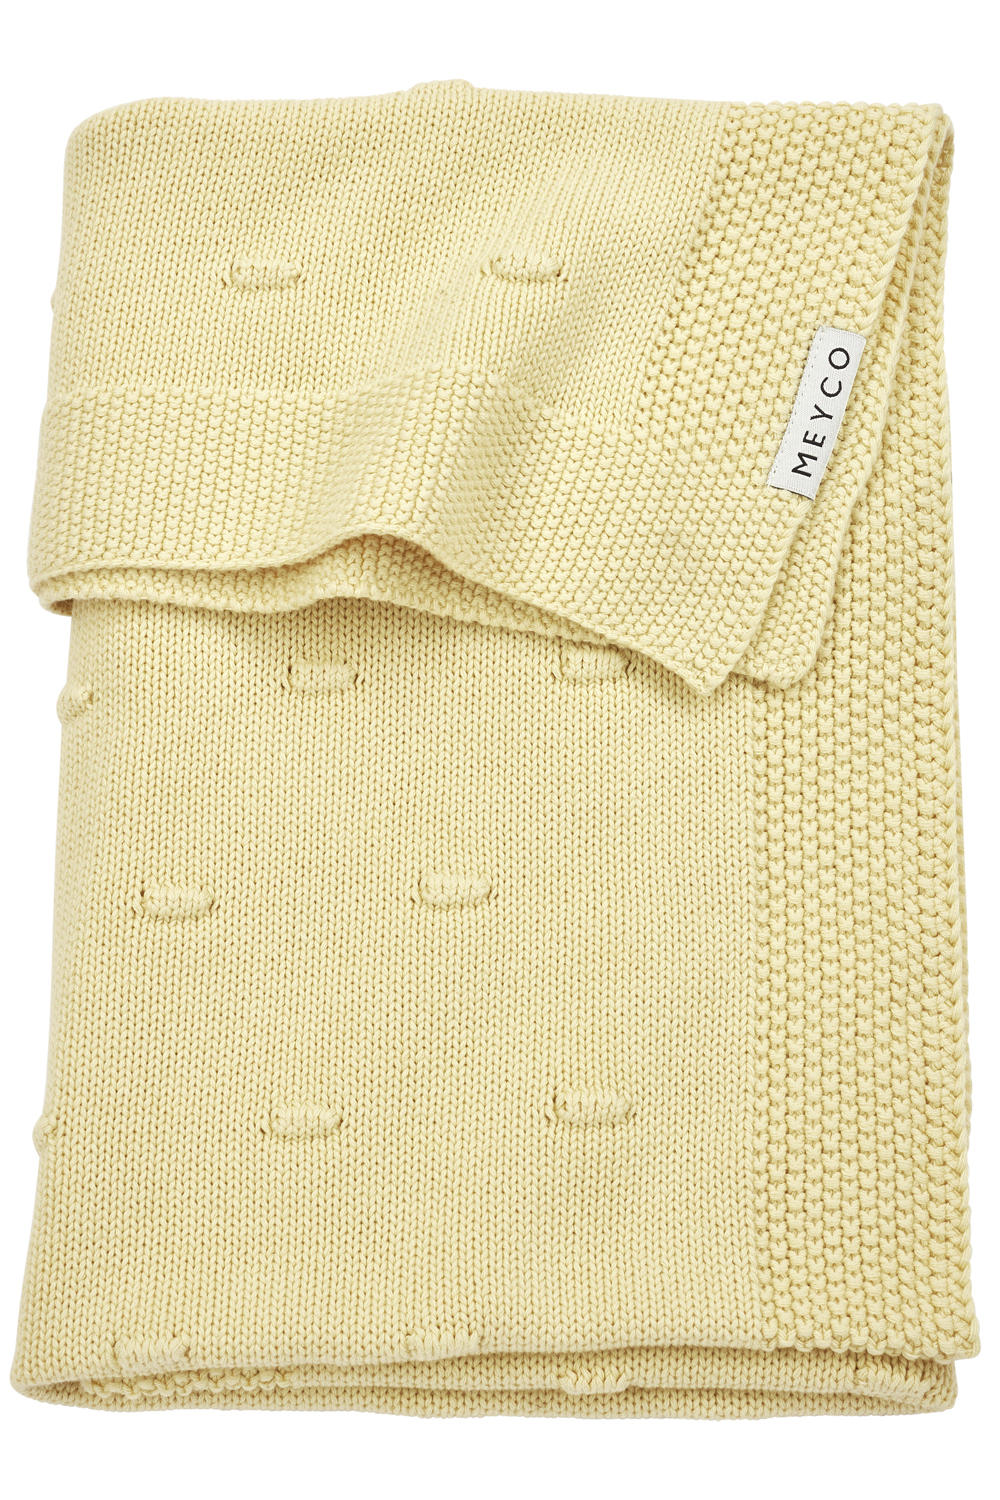 Babydecke groß Knots - soft yellow - 100x150cm